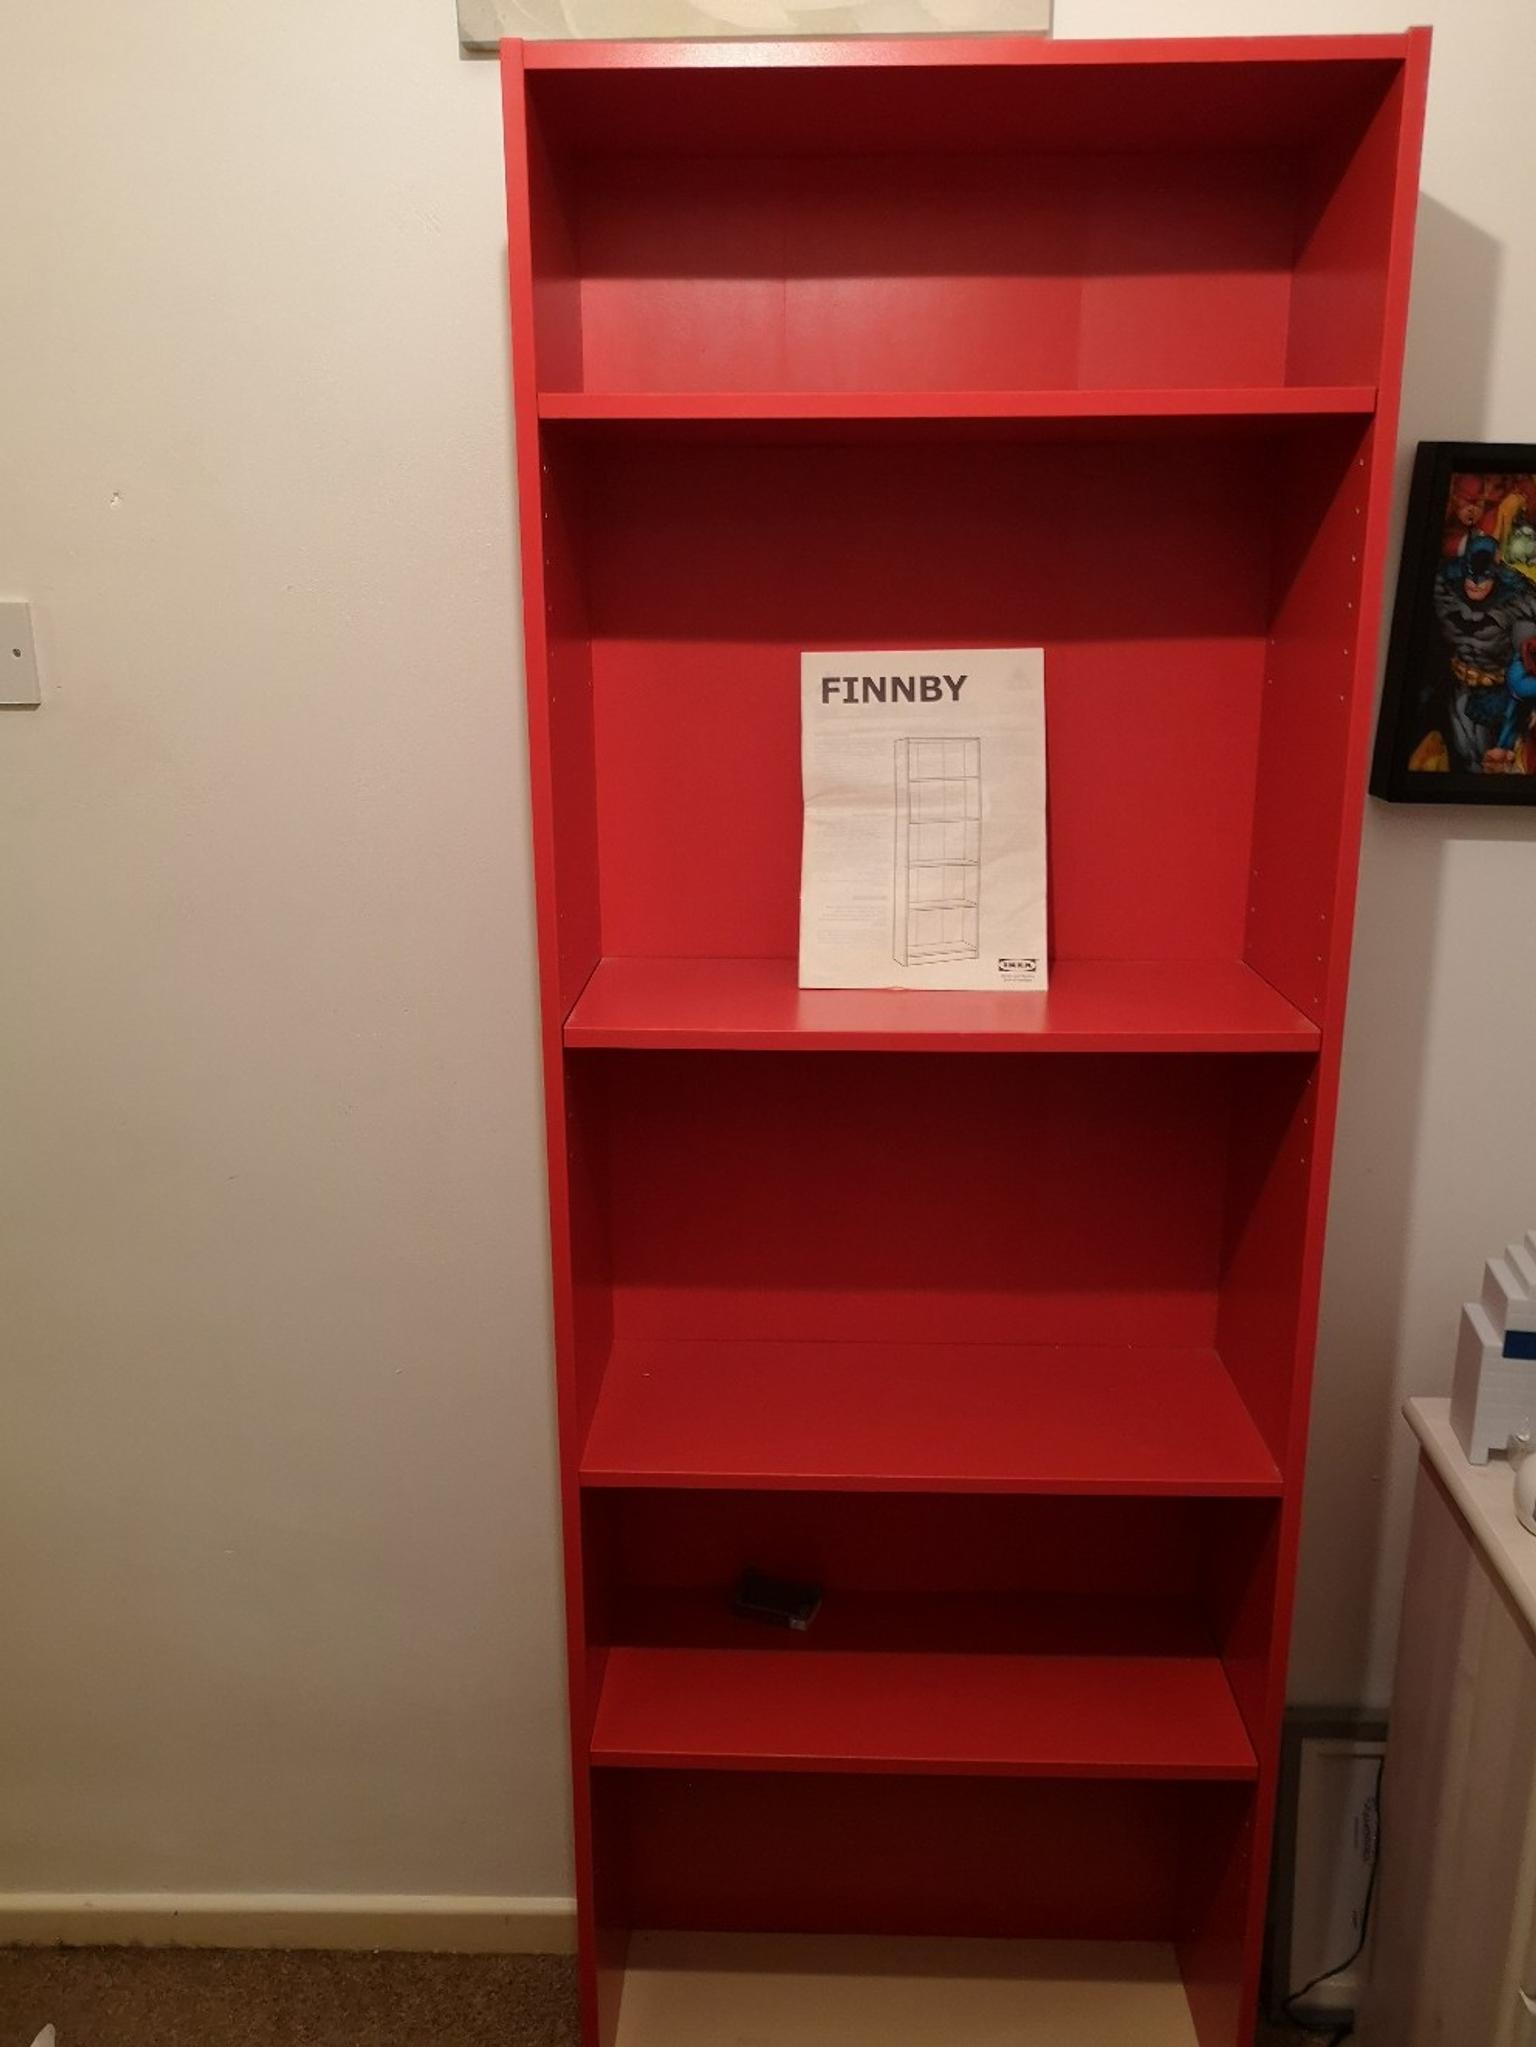 Ikea Red Finnby Bookshelf In B63 Dudley Fur 12 00 Zum Verkauf